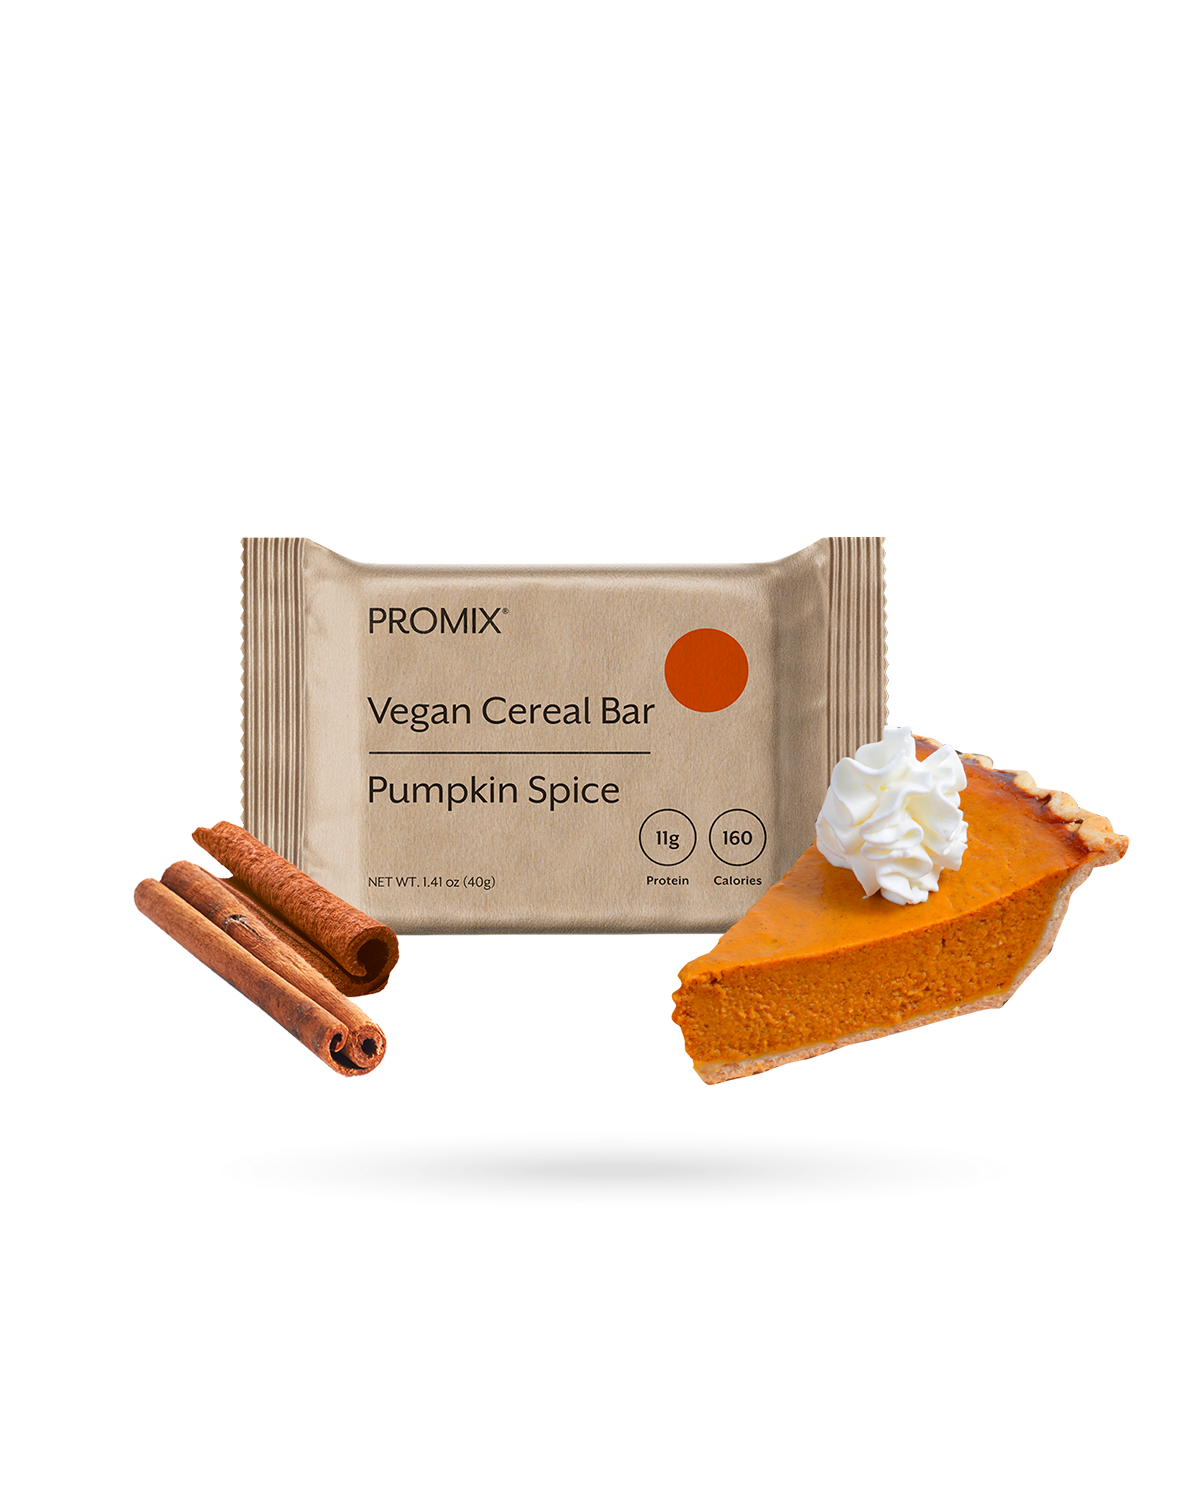 Pumpkin Spice Vegan Cereal Bars